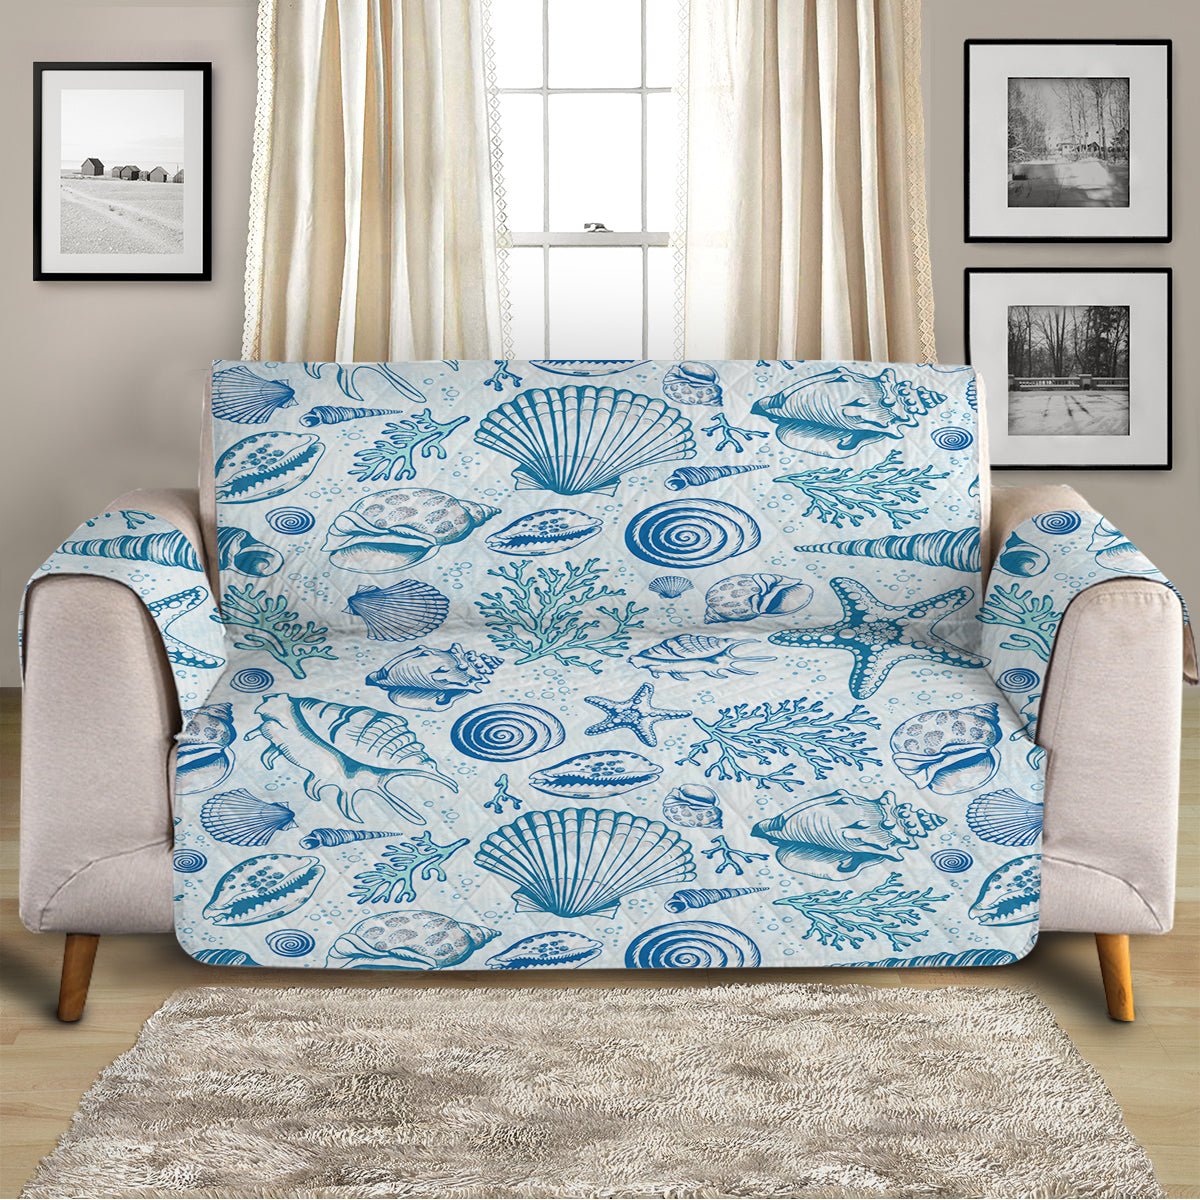 Blue Seashells Sofa Cover